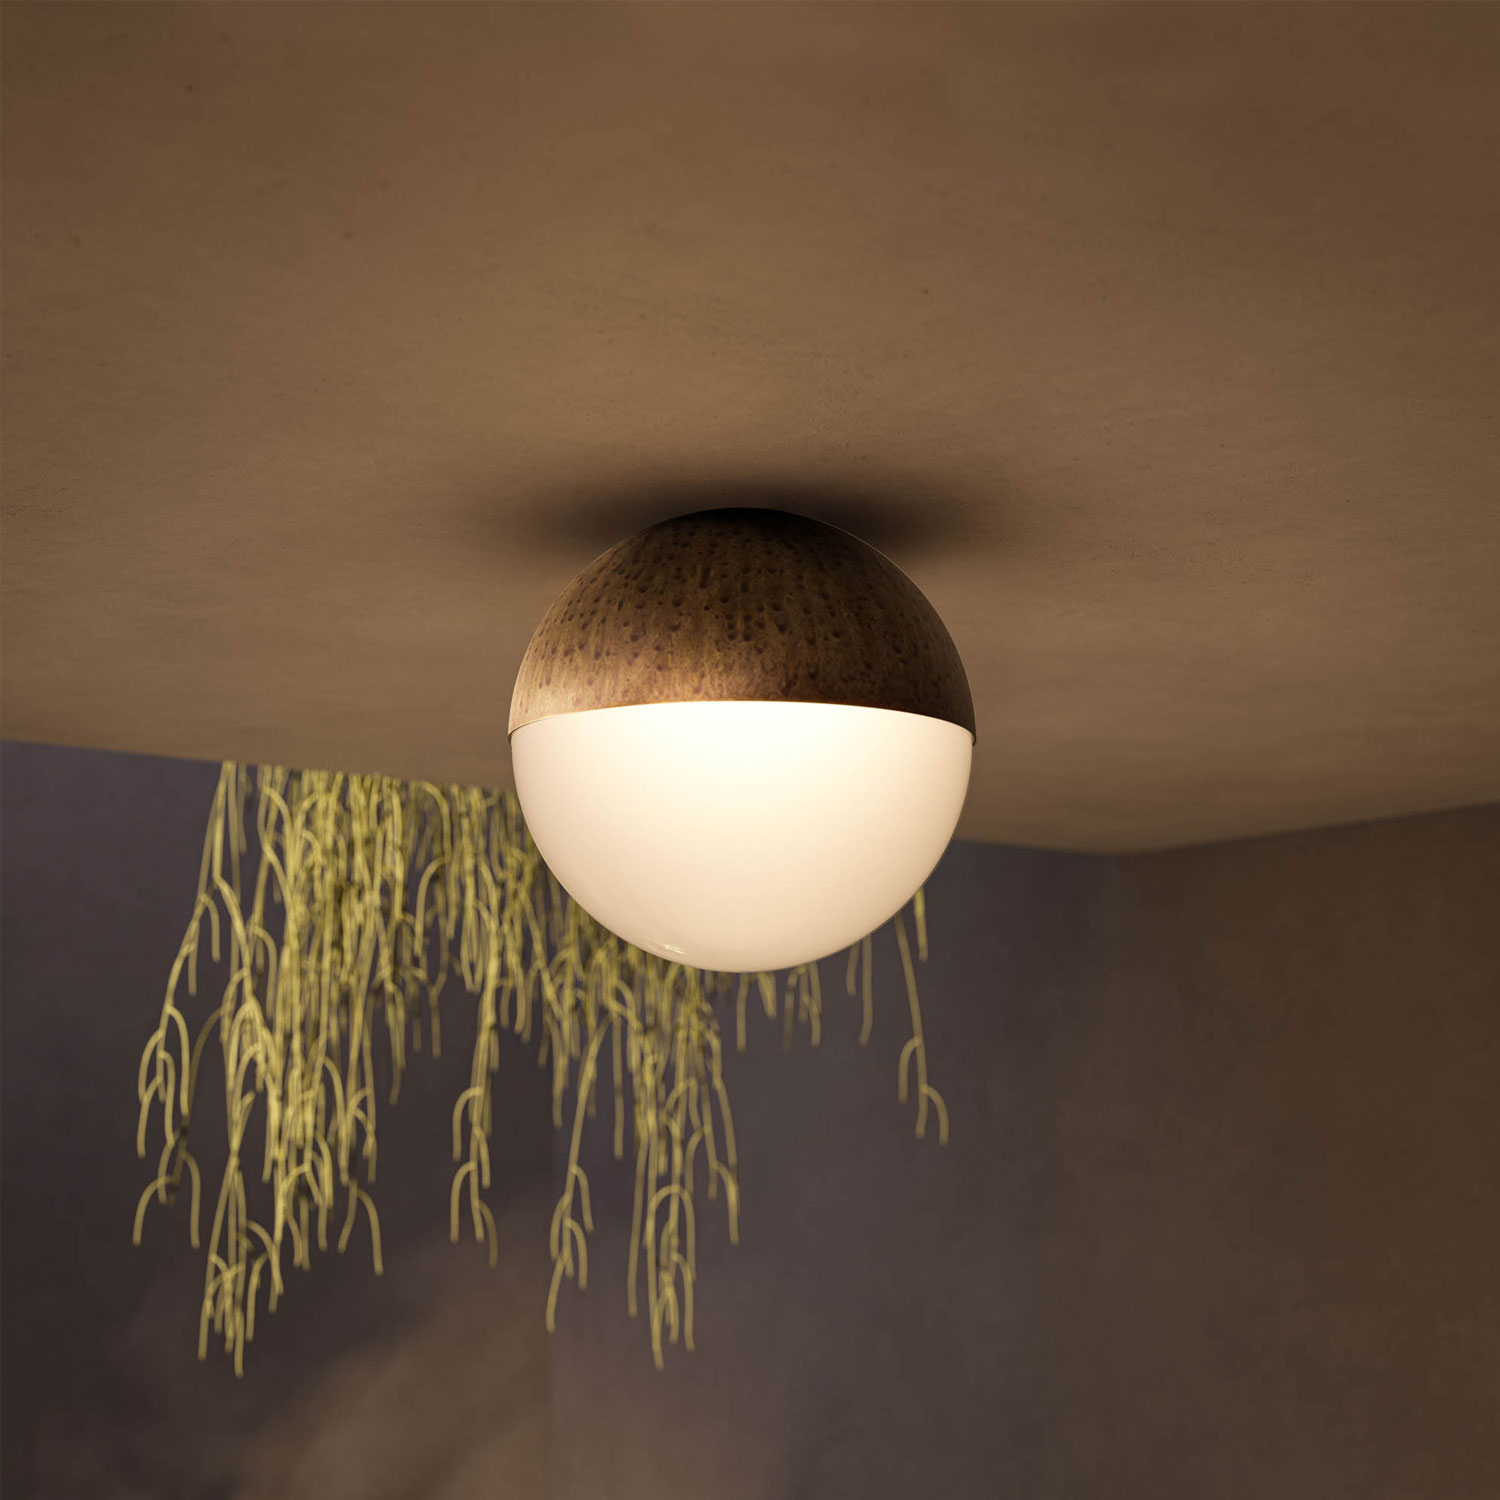 Sfera outdoor ceiling light by Il Fanale